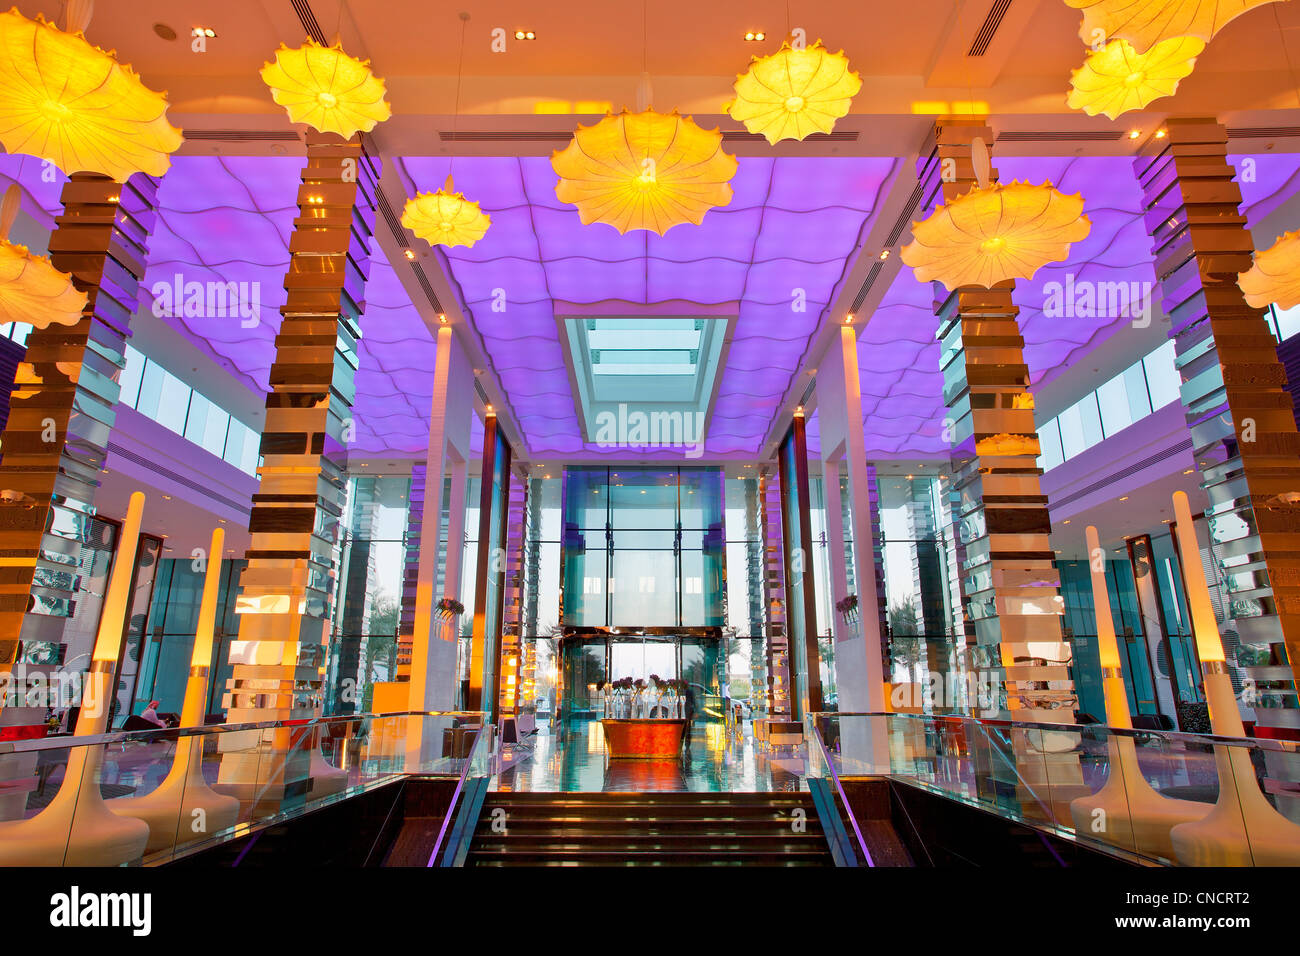 Abu Dhabi , Hotel Fairmont Foto de stock